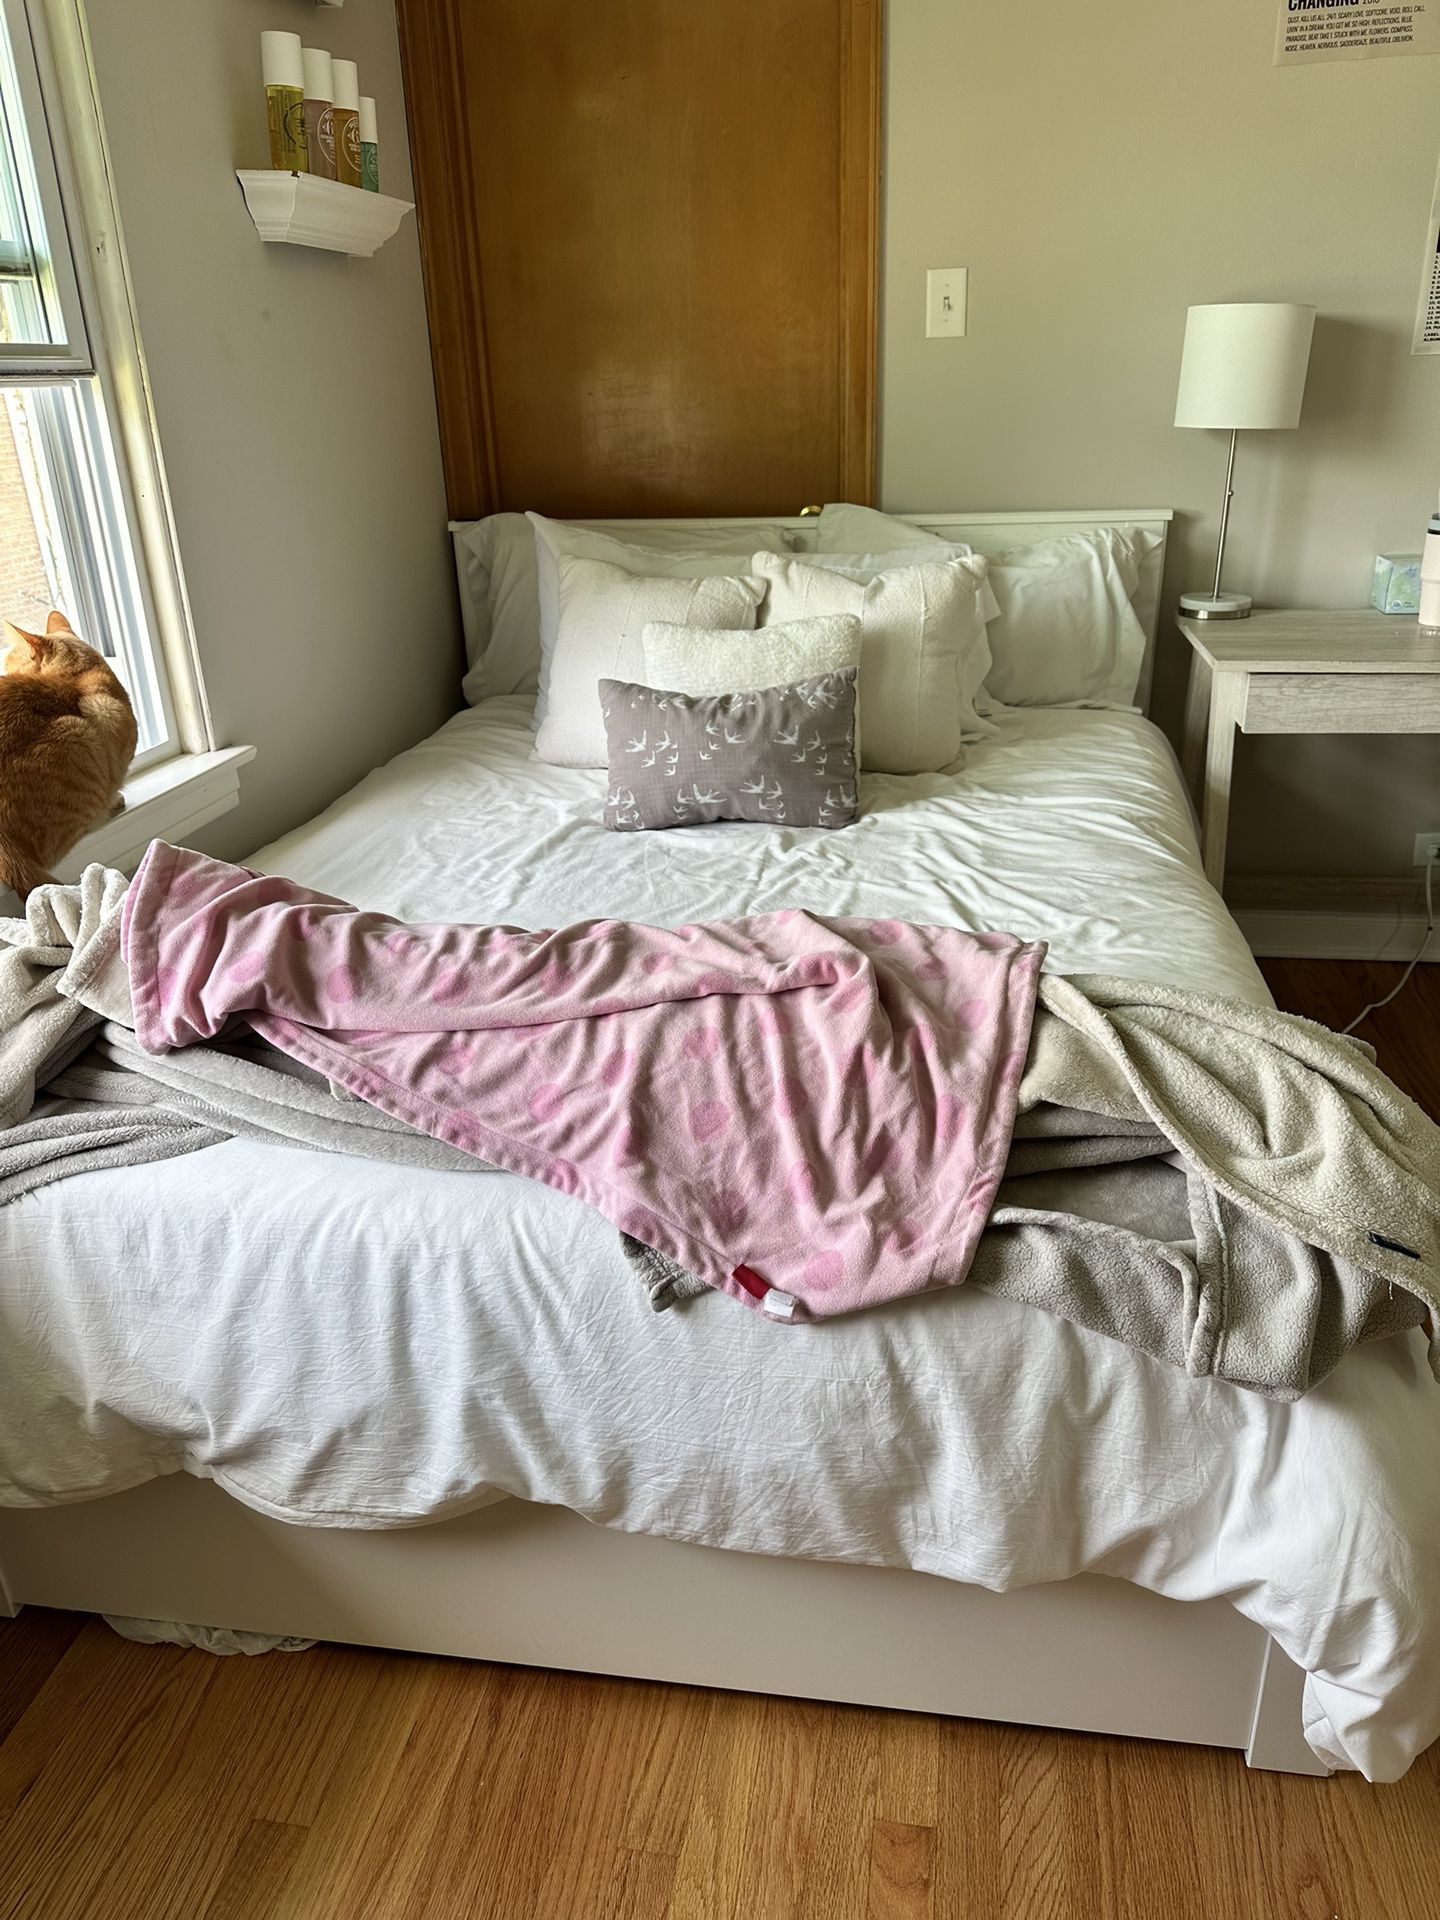 Ikea full size bed frame